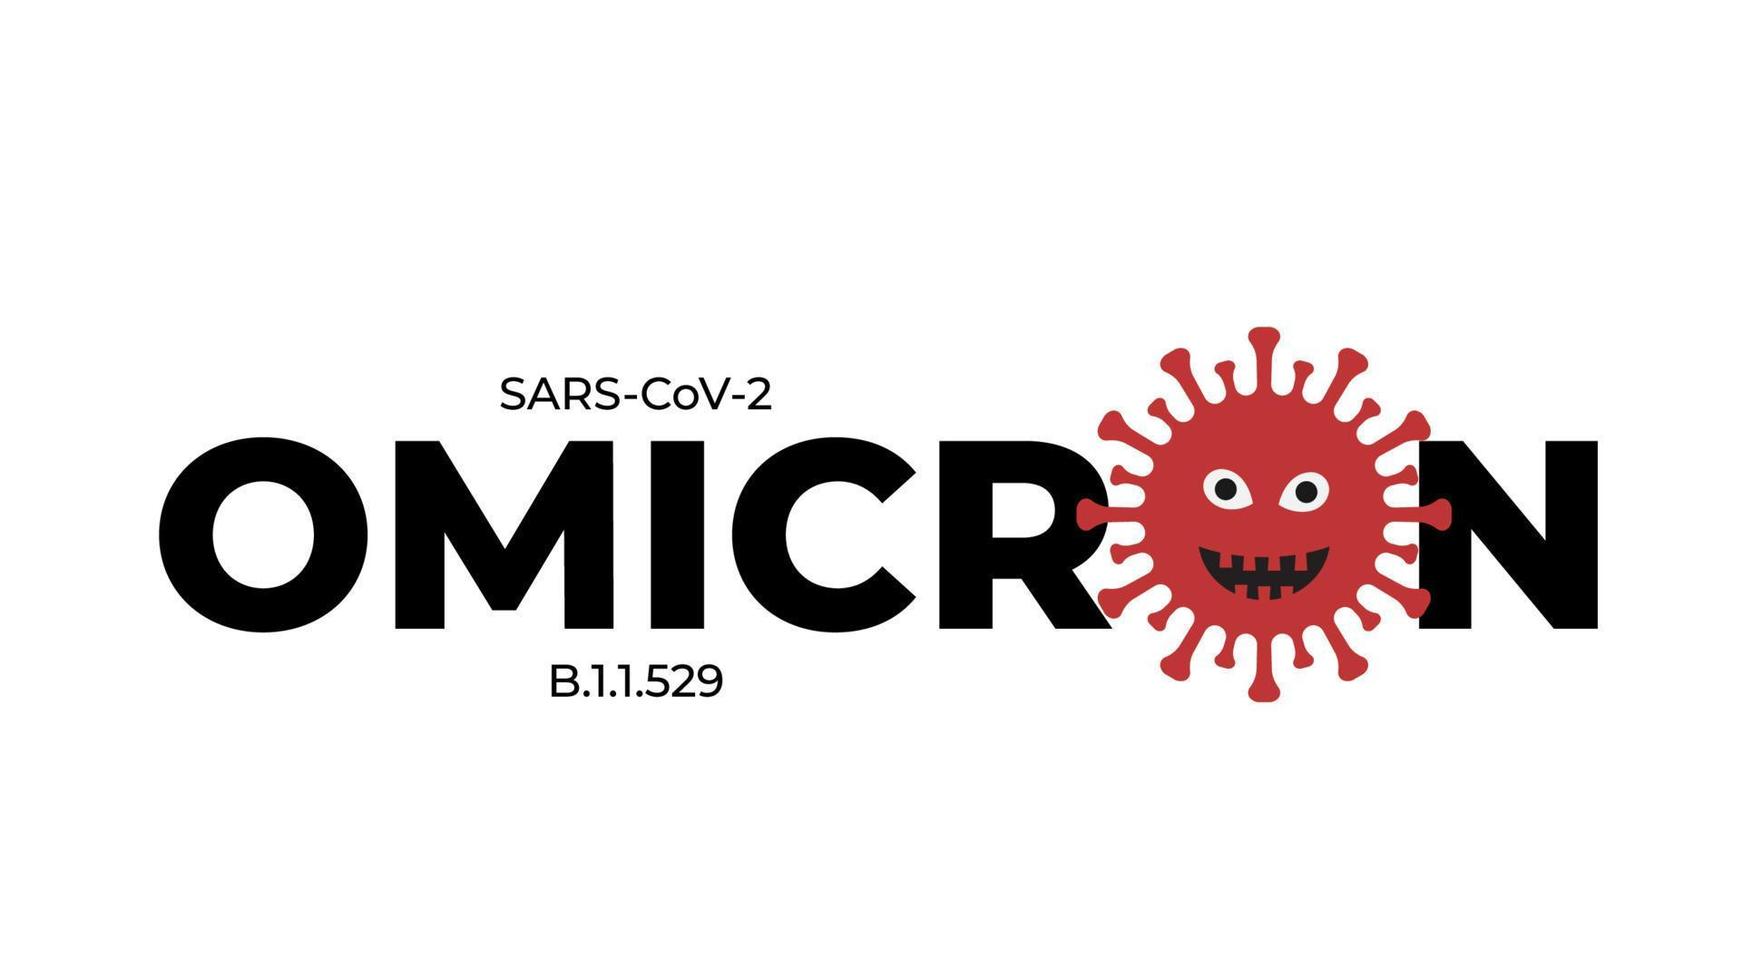 variante omicron del coronavirus covid-19. pandemia del virus sars-cov-2. plantilla vectorial para póster tipográfico, pancarta, volante, etc. vector